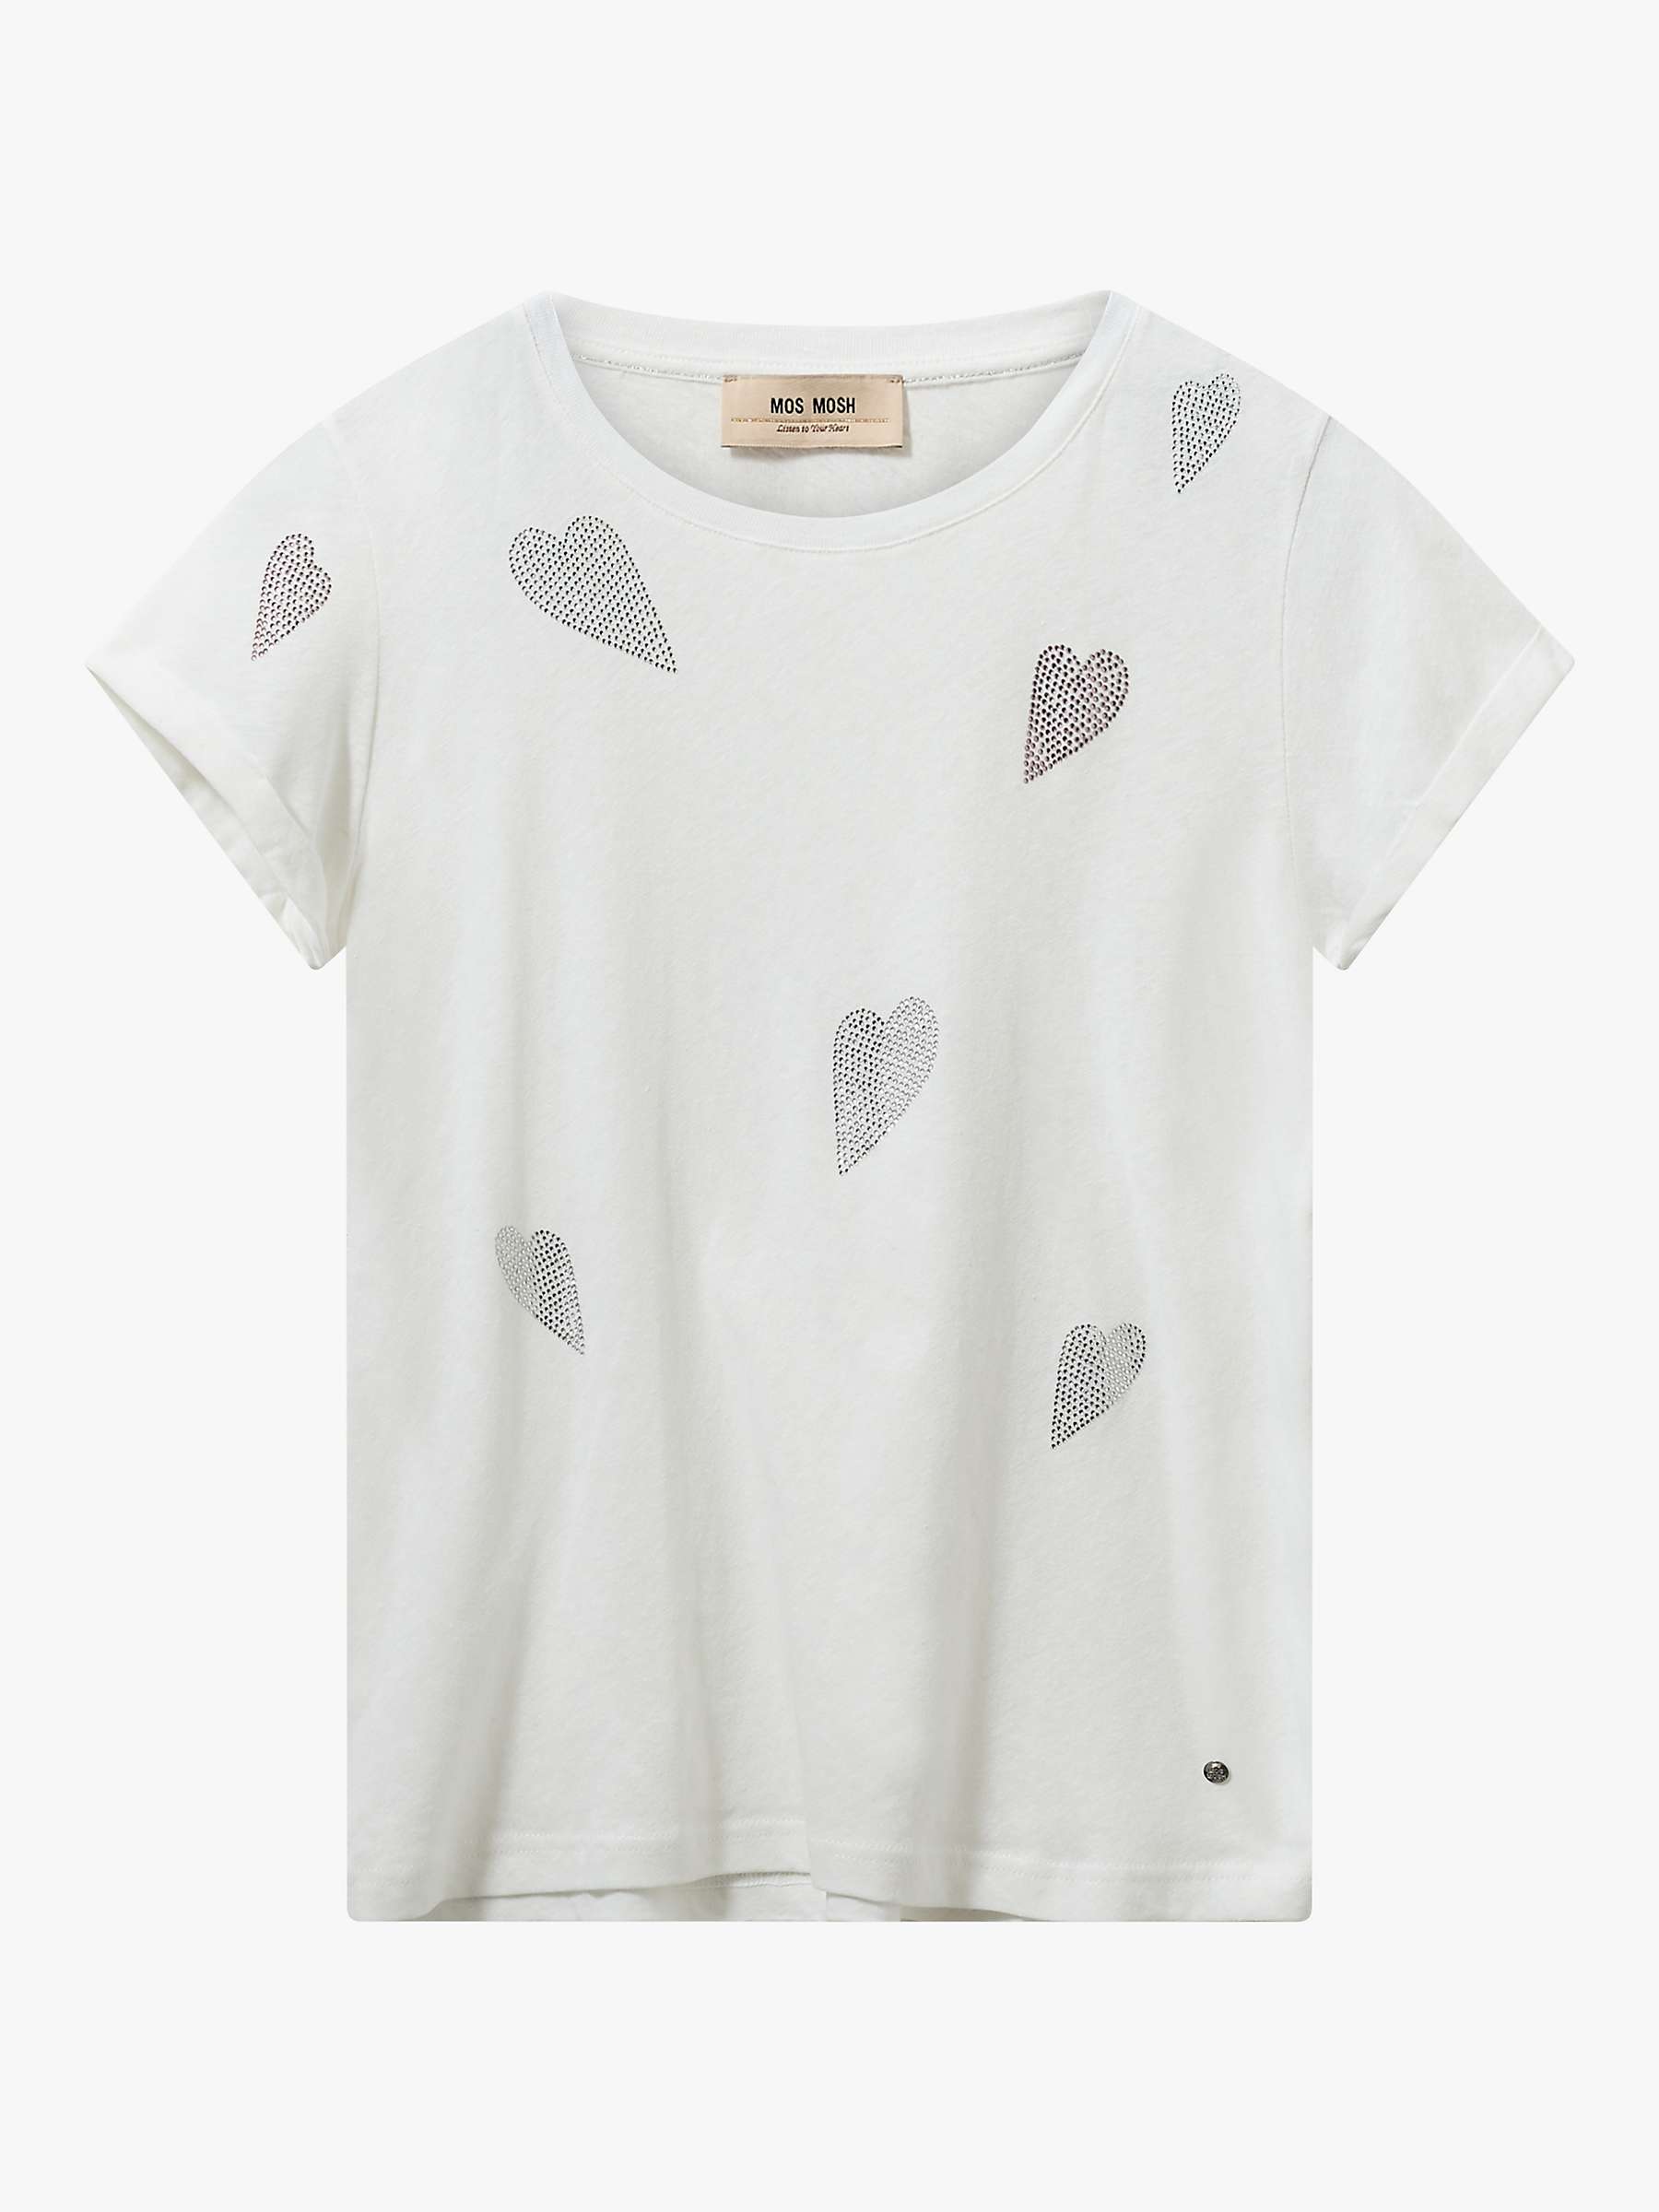 Buy MOS MOSH Laura Glam Short Sleeve T-Shirt, White Online at johnlewis.com